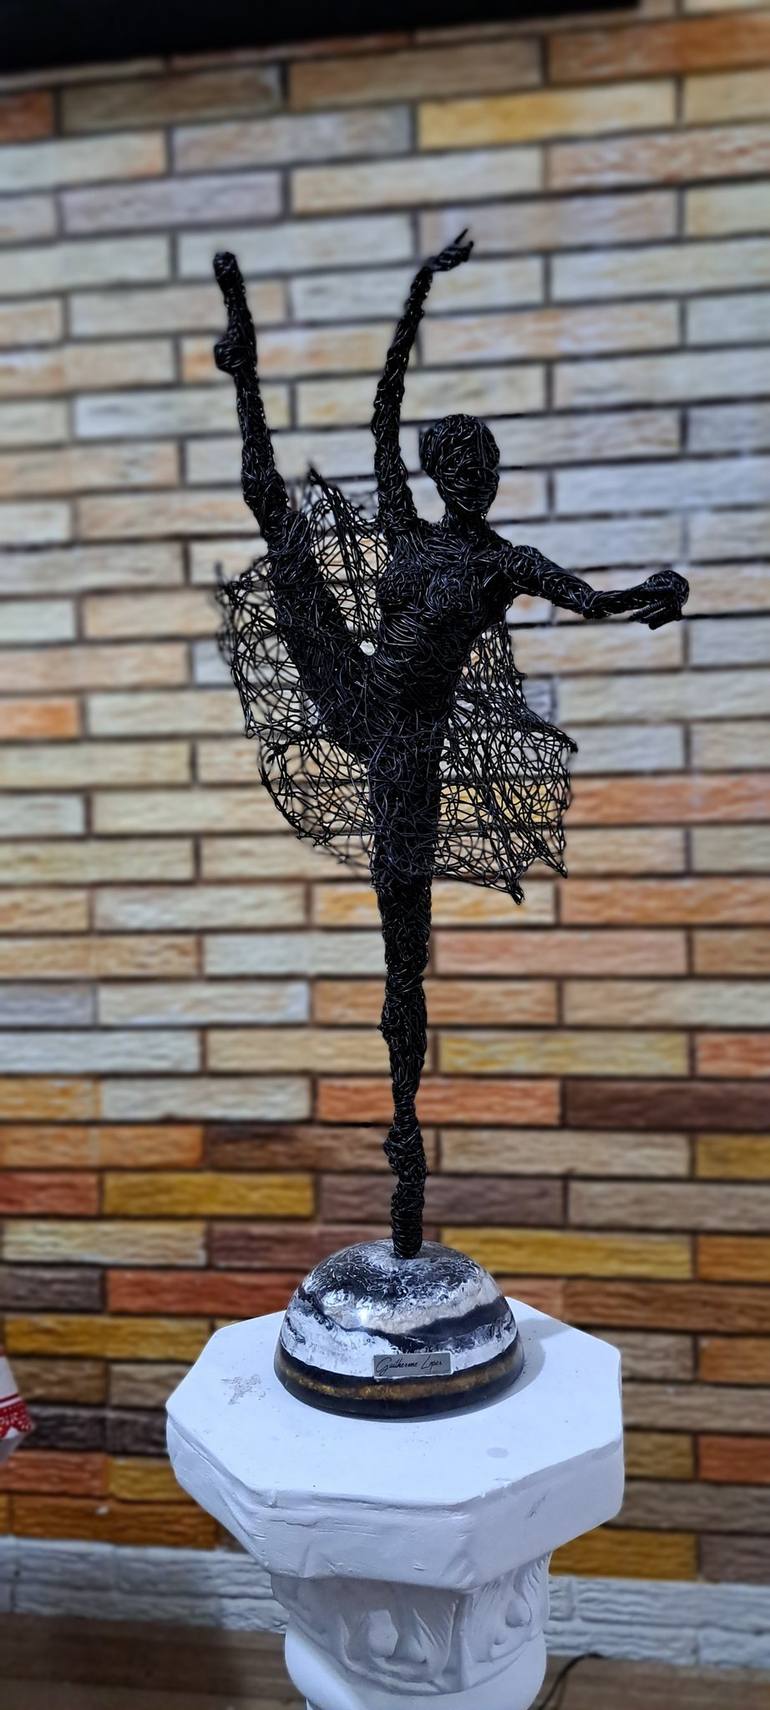 Original Performing Arts Sculpture by Guilherme Lopes